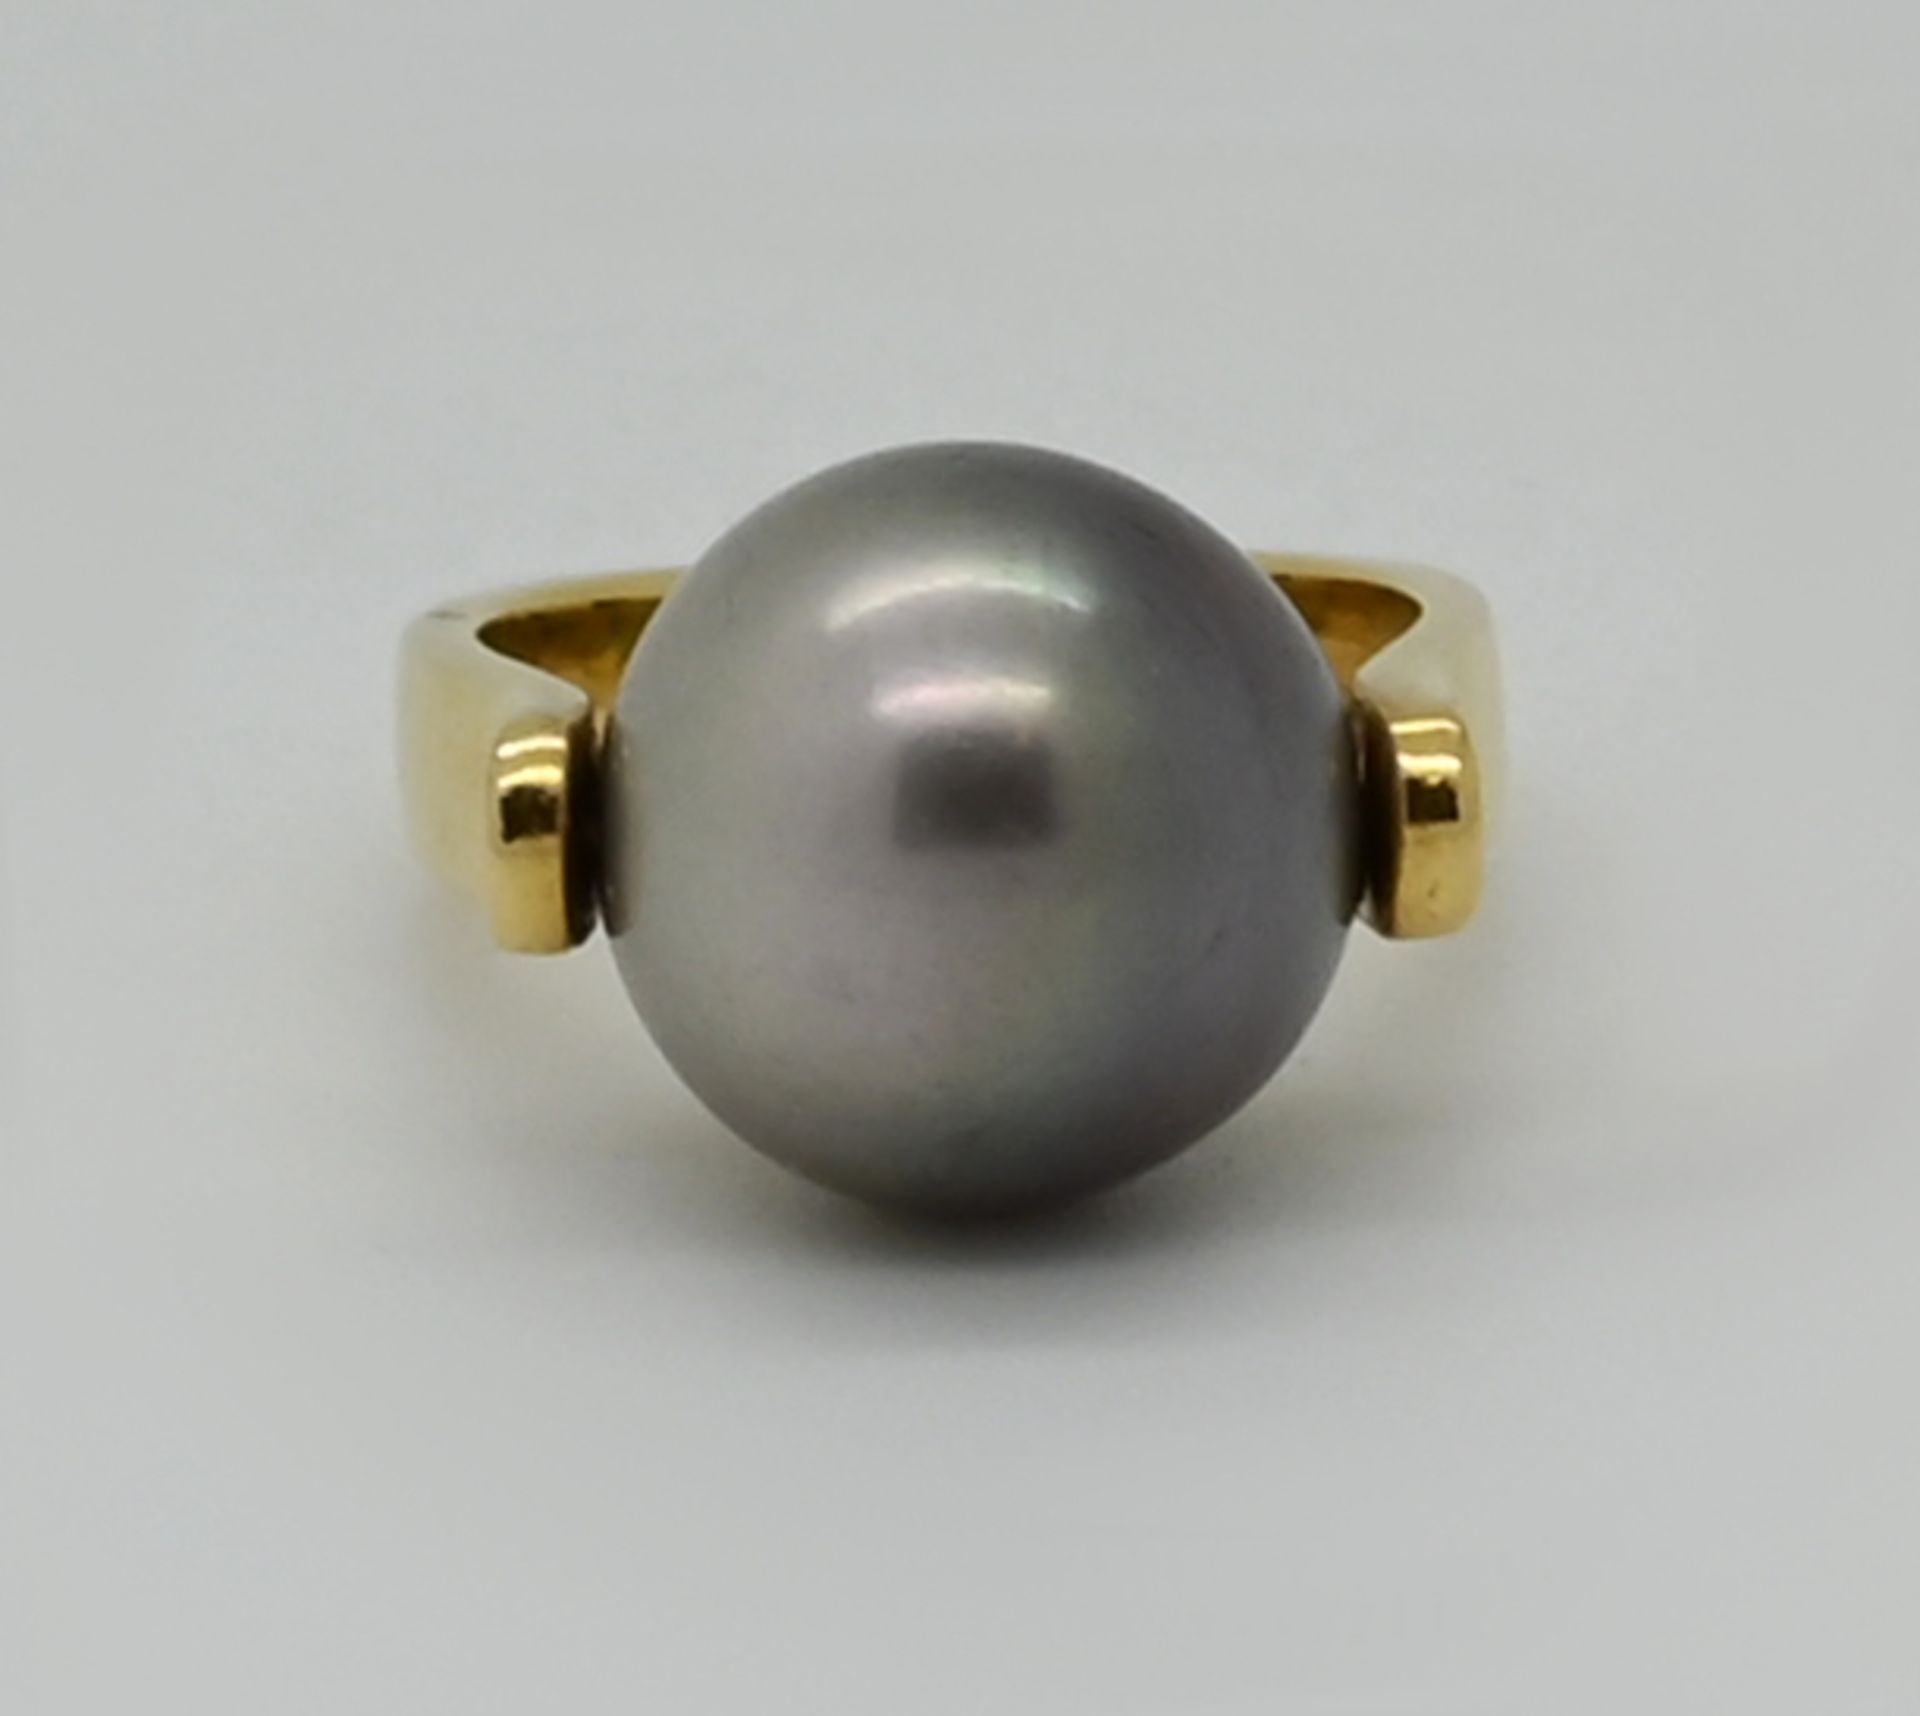 1 Damenring GG 18ct., mit grauer Perle, Durchmesser bis zu ca. 1,4cm, Ringgr. ca. 56, Tsp.